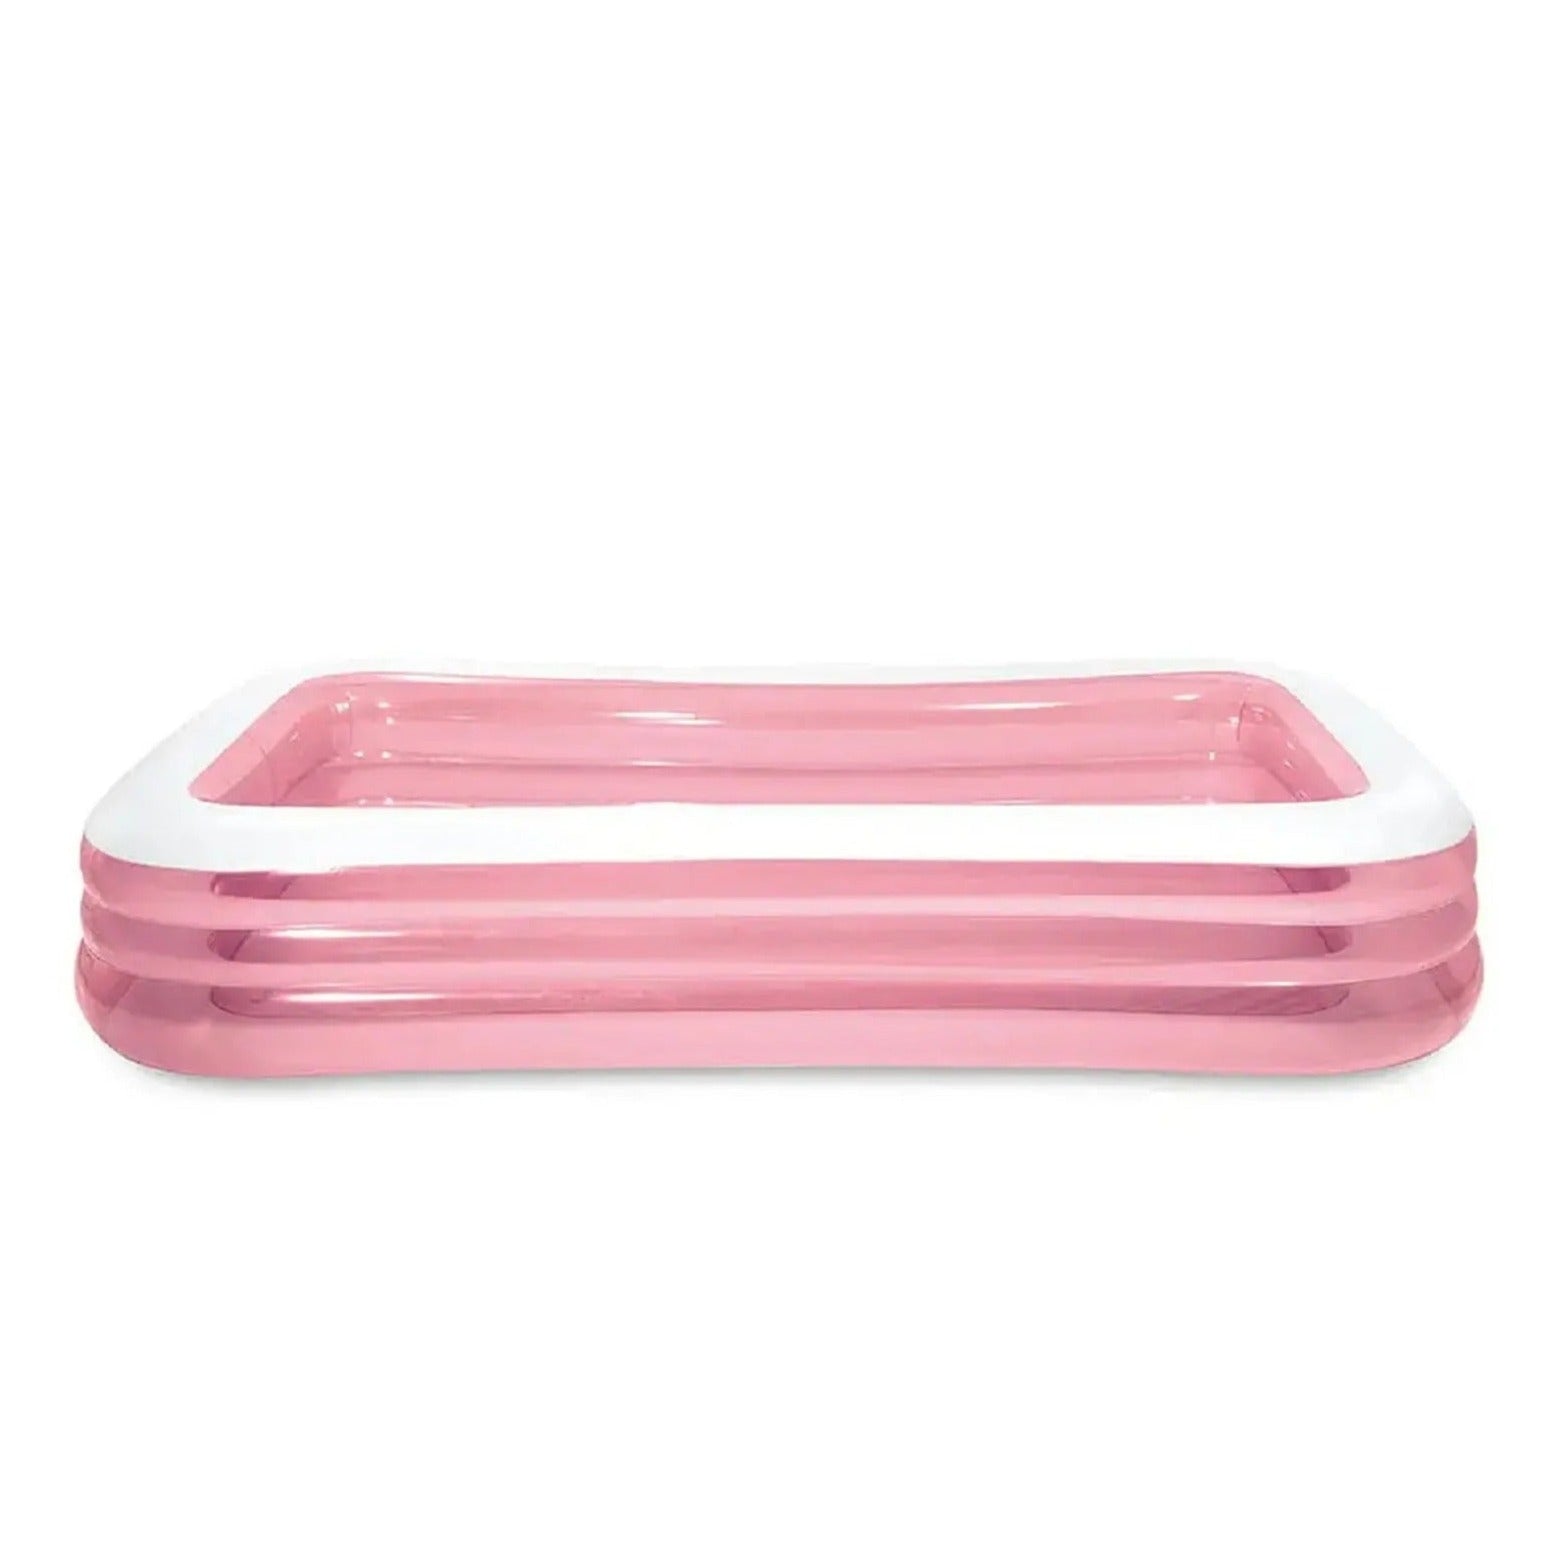 Intex - Swim Center Inflatable Family Pool - Aqua Pink - (L 304.8 x W 182.8 x H 55.8 cm)